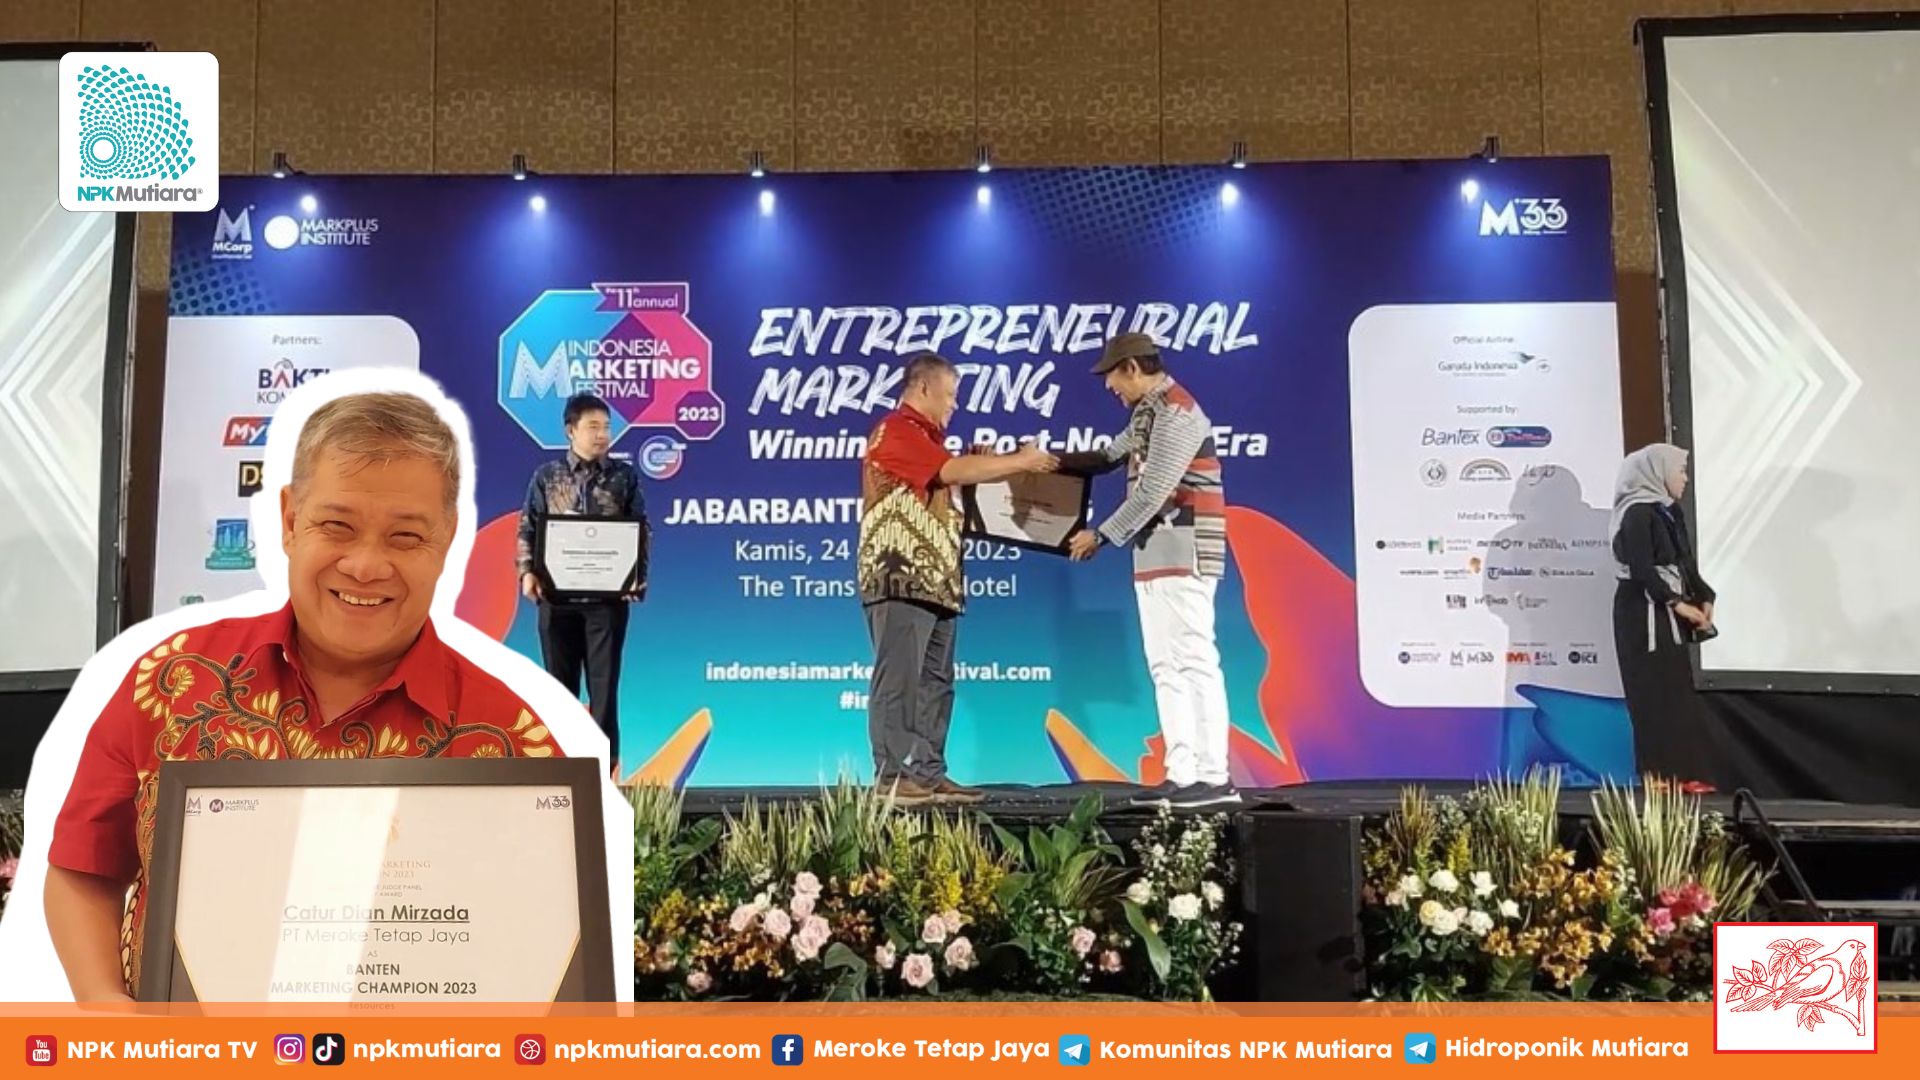 PT Meroke Tetap Jaya Entrepreneurial Marketing 2023